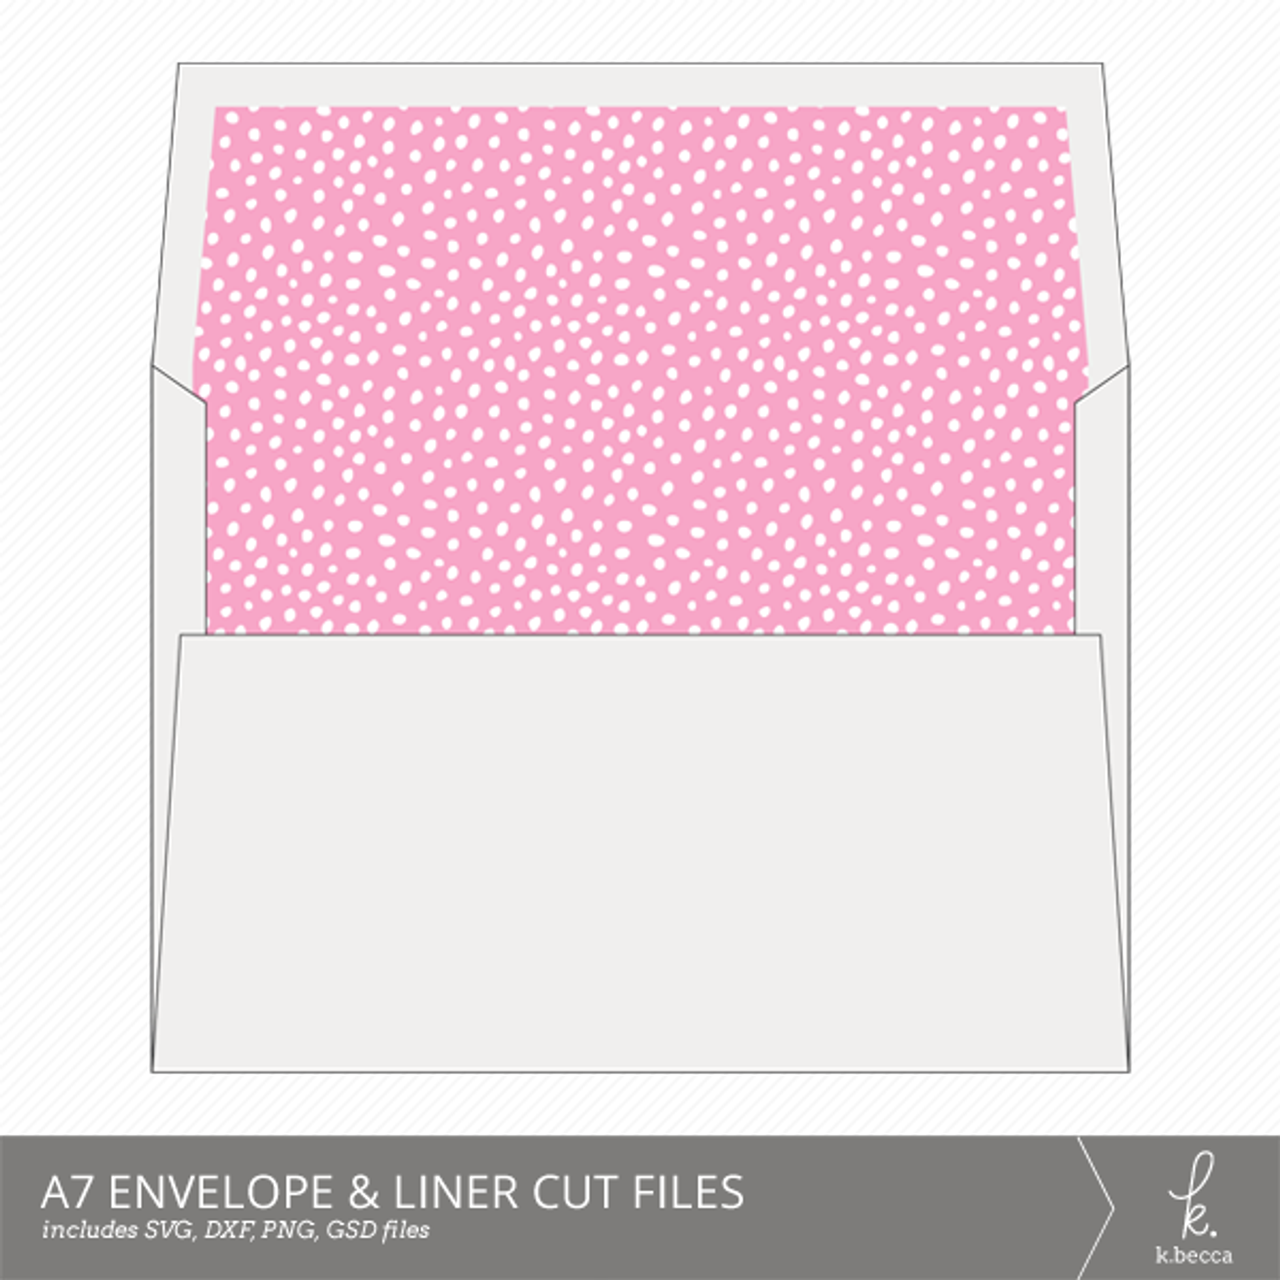 A7 Envelope & Liner Cut Files k.becca